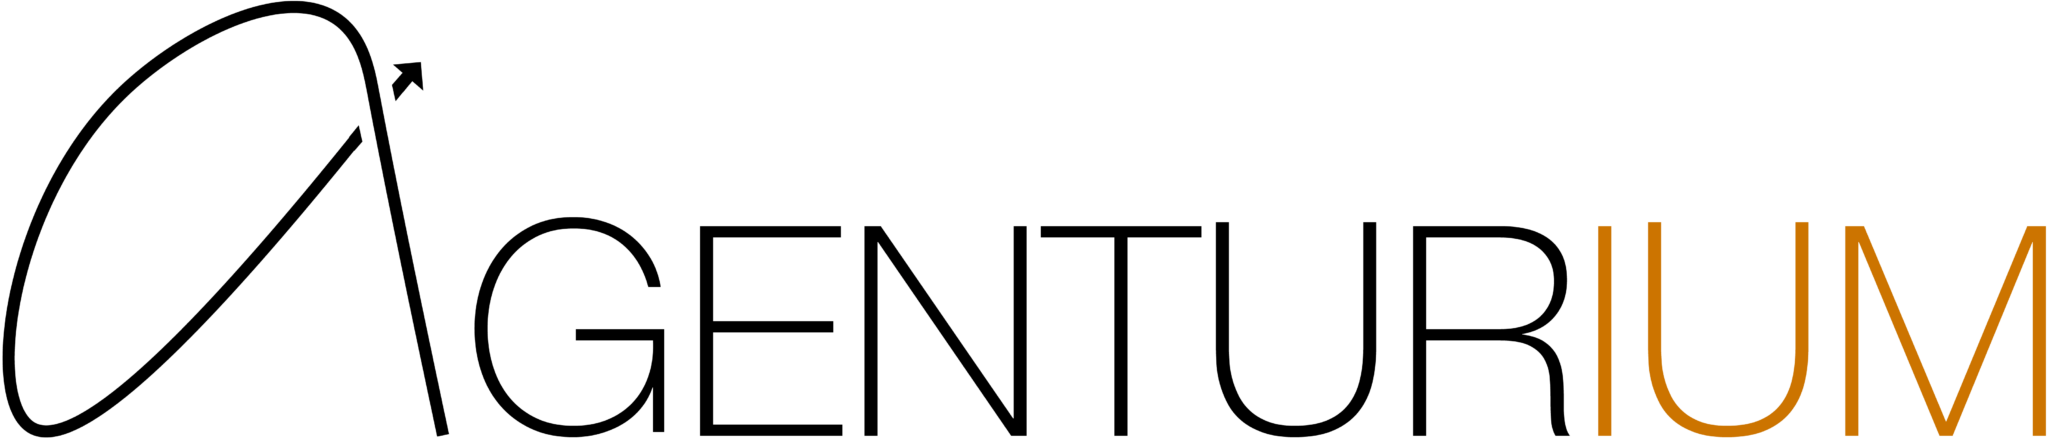 Agenturium-Logo_sort_komprimeret